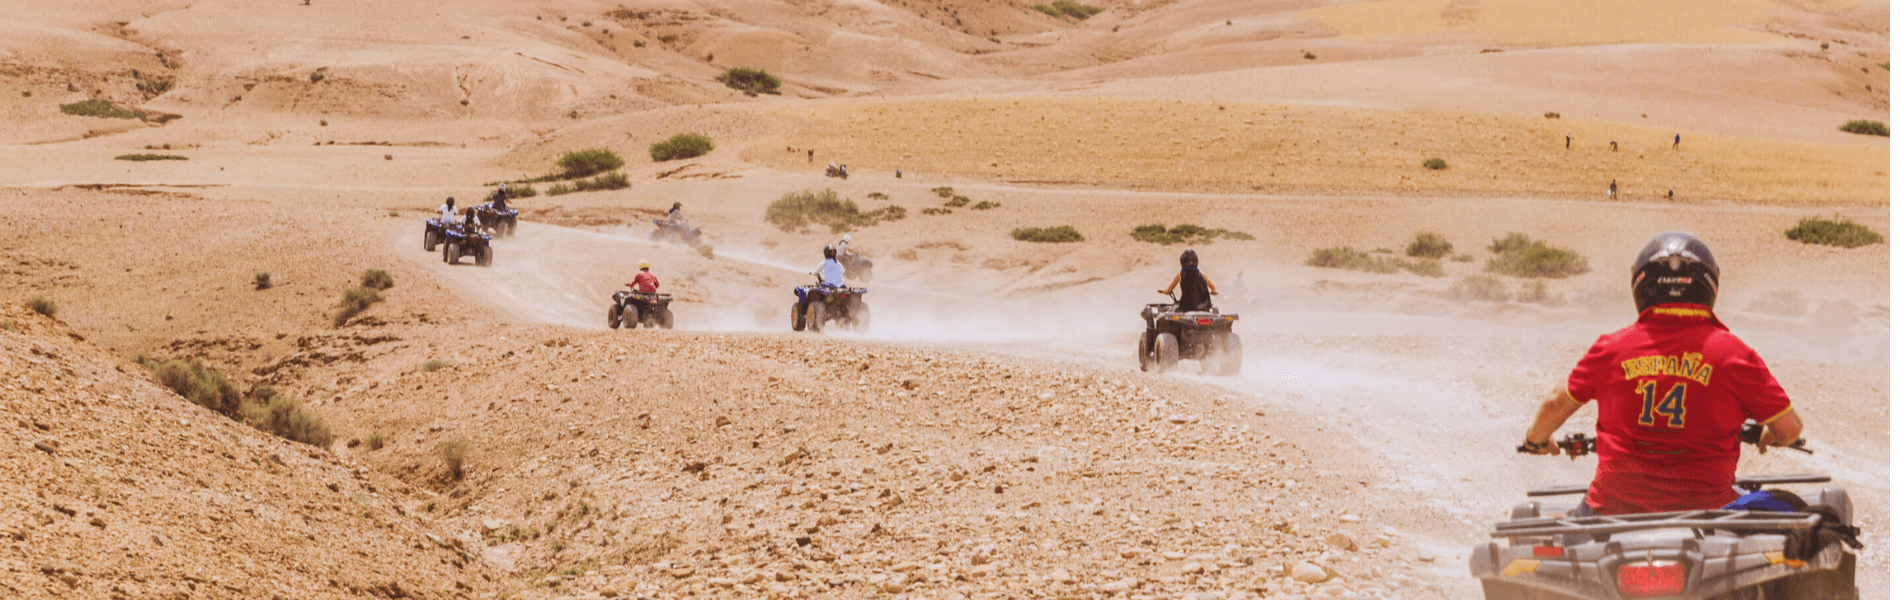 Balade en QUAD au désert d’Agafay